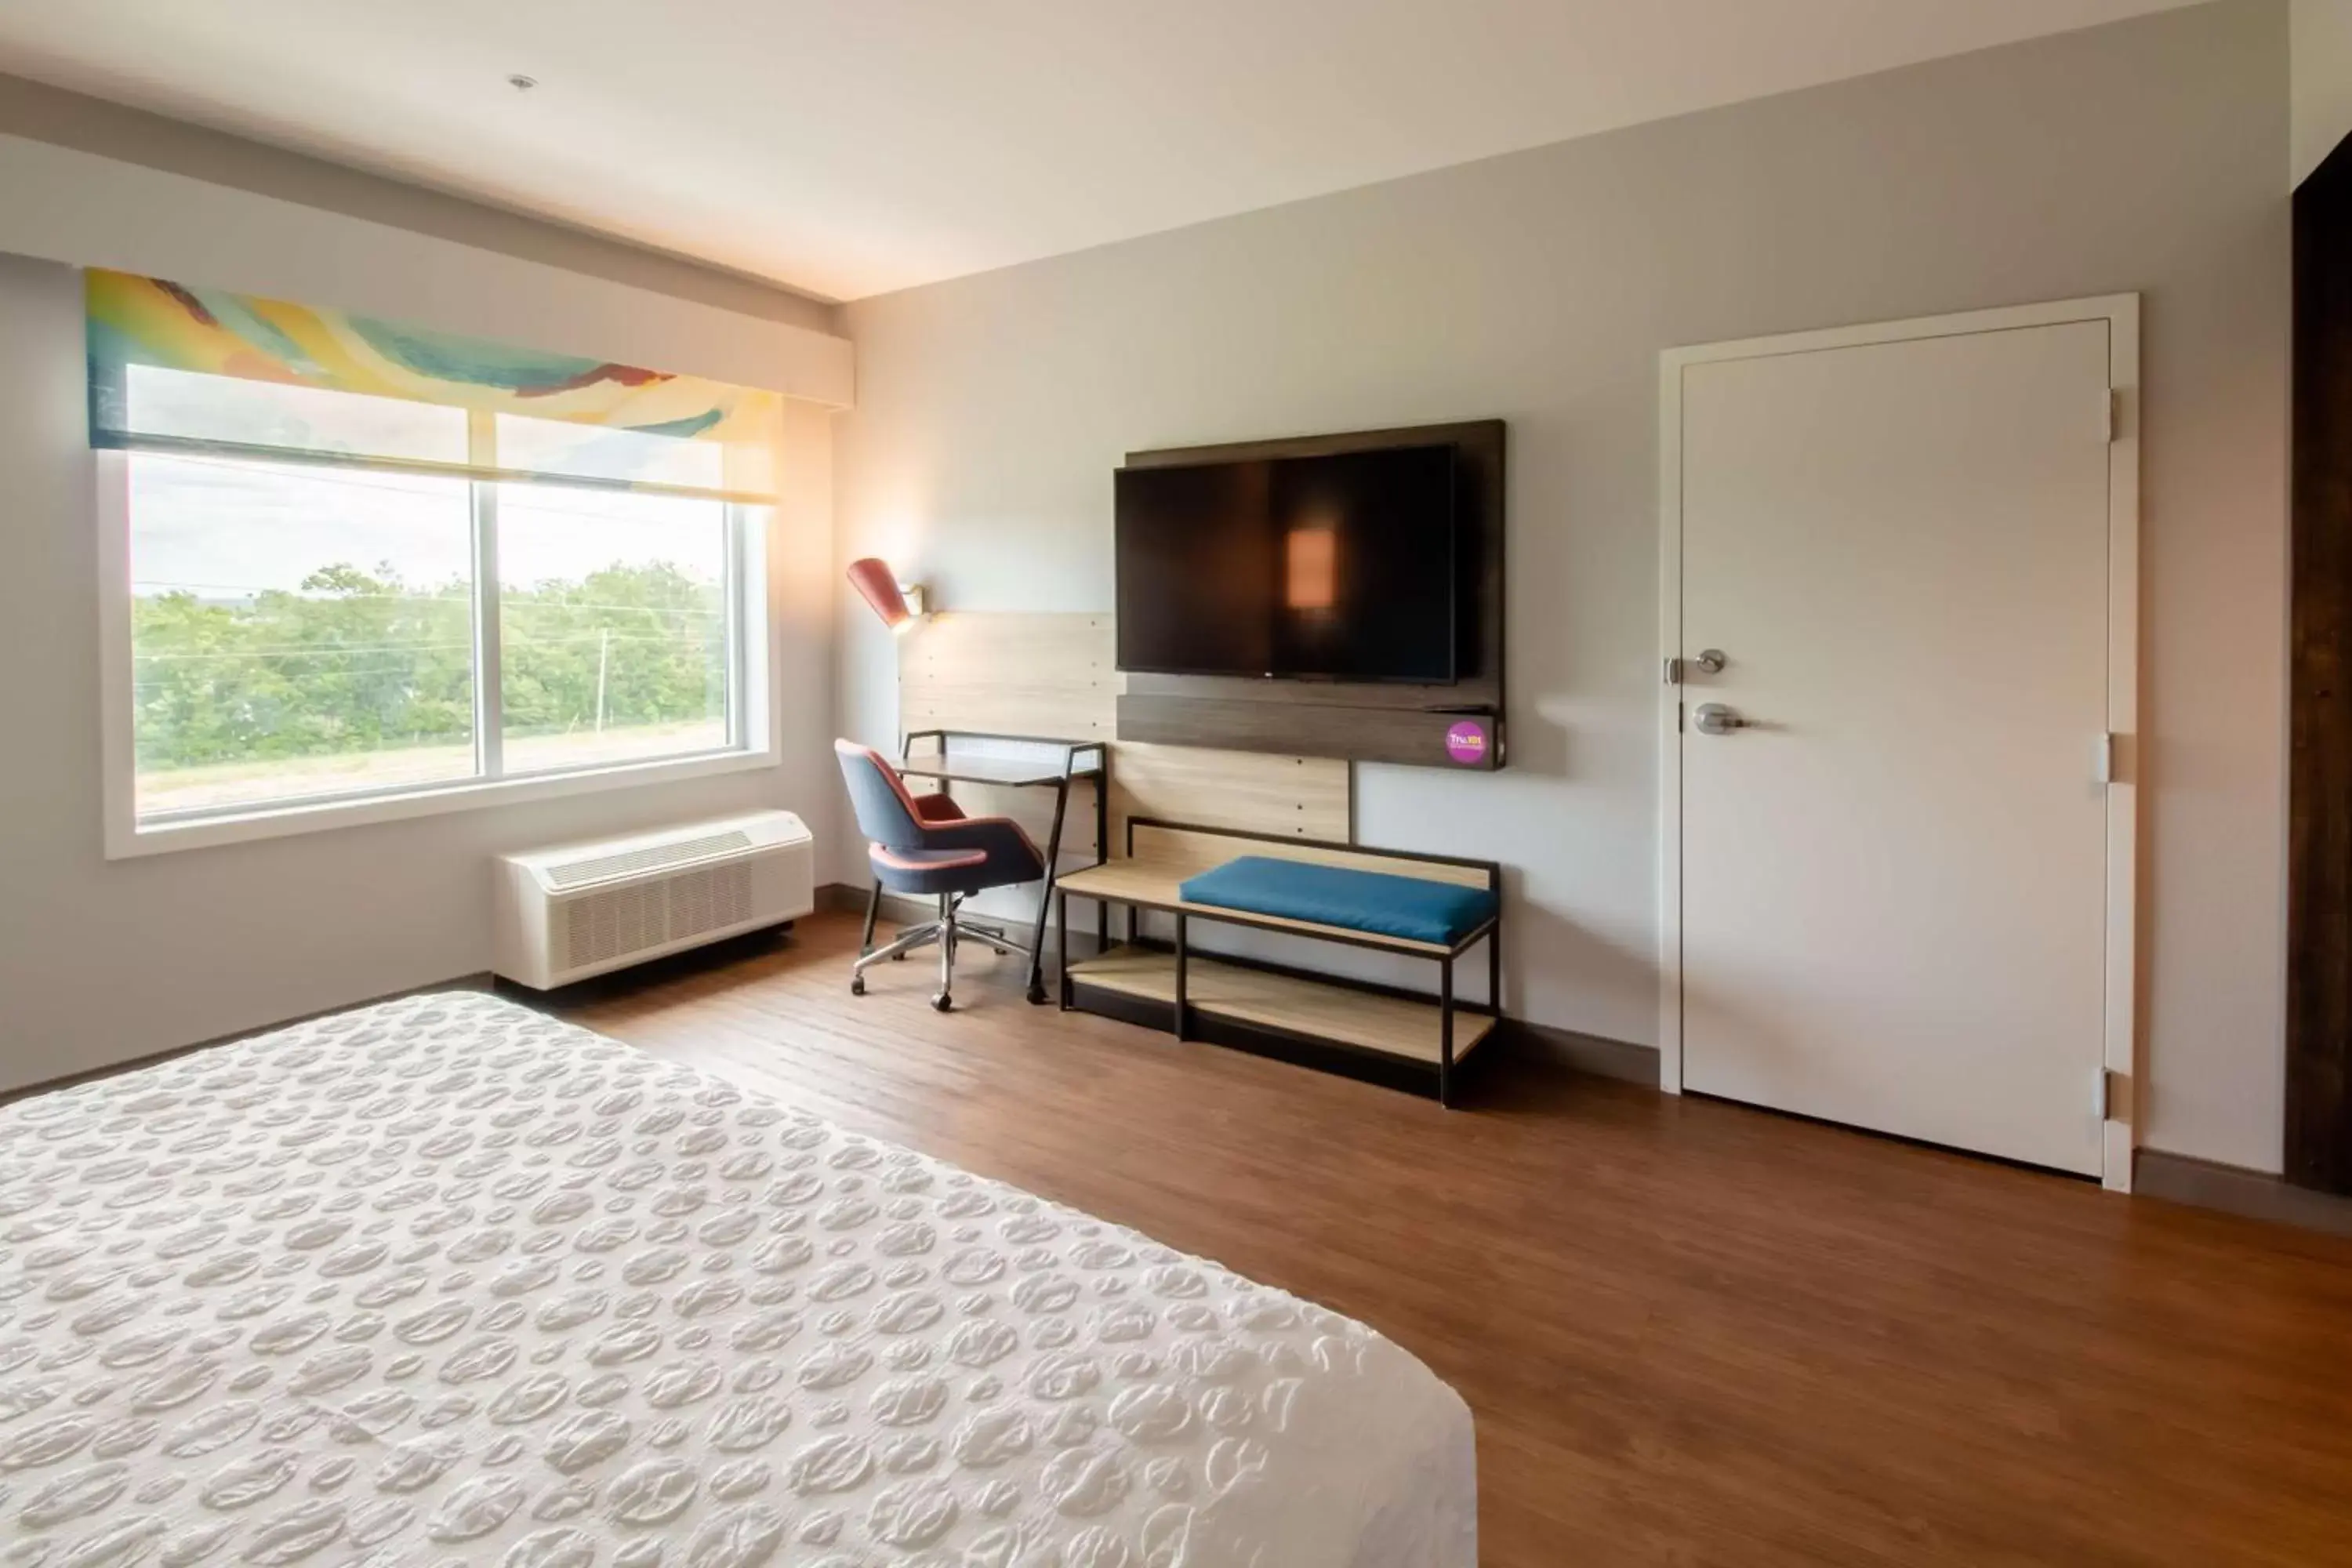 Bedroom, TV/Entertainment Center in Tru By Hilton Niceville, Fl